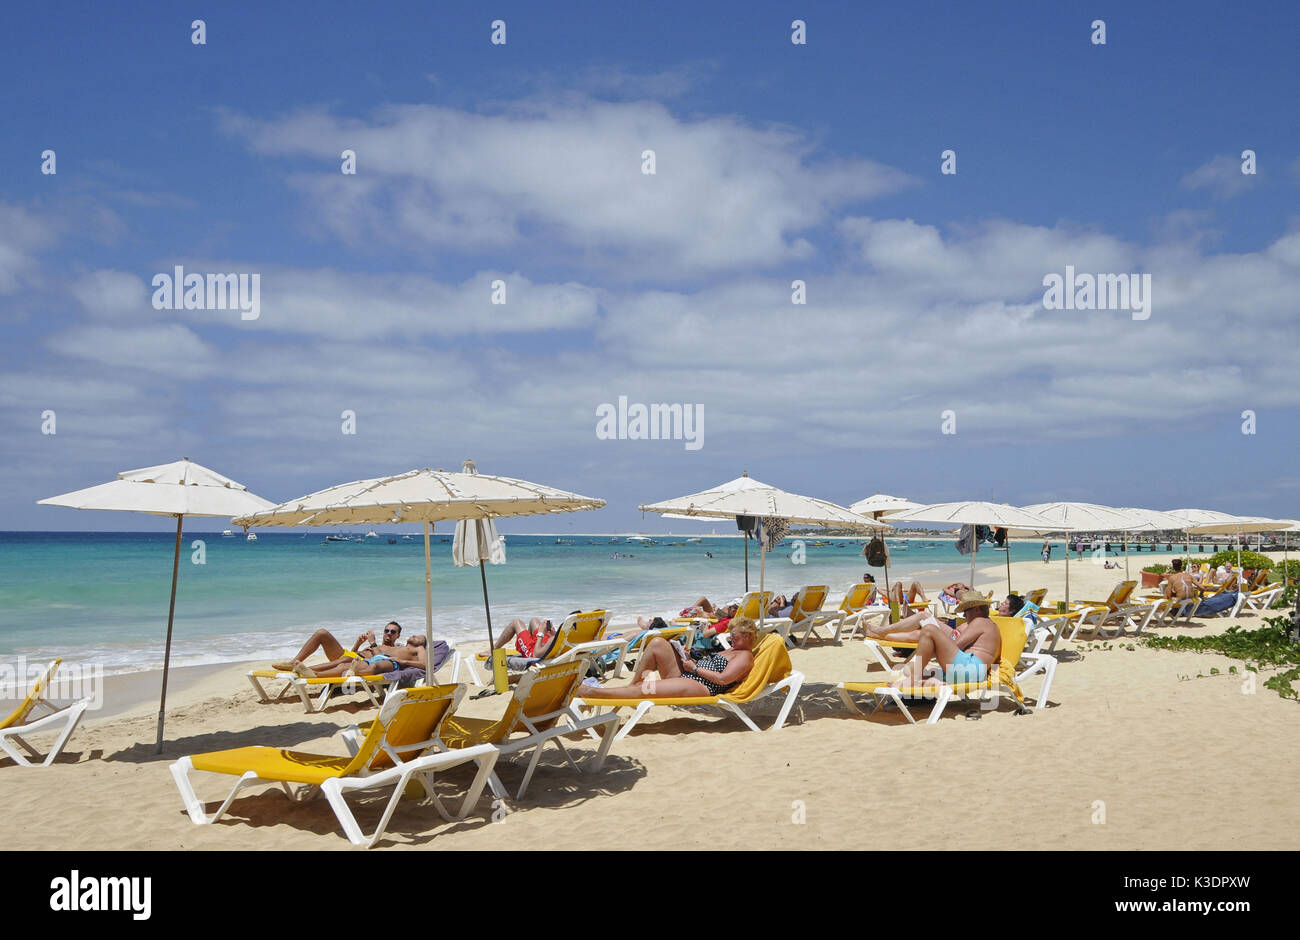 Santa Maria Beach, Insel Sal, Kap Verde Inseln, Stockfoto